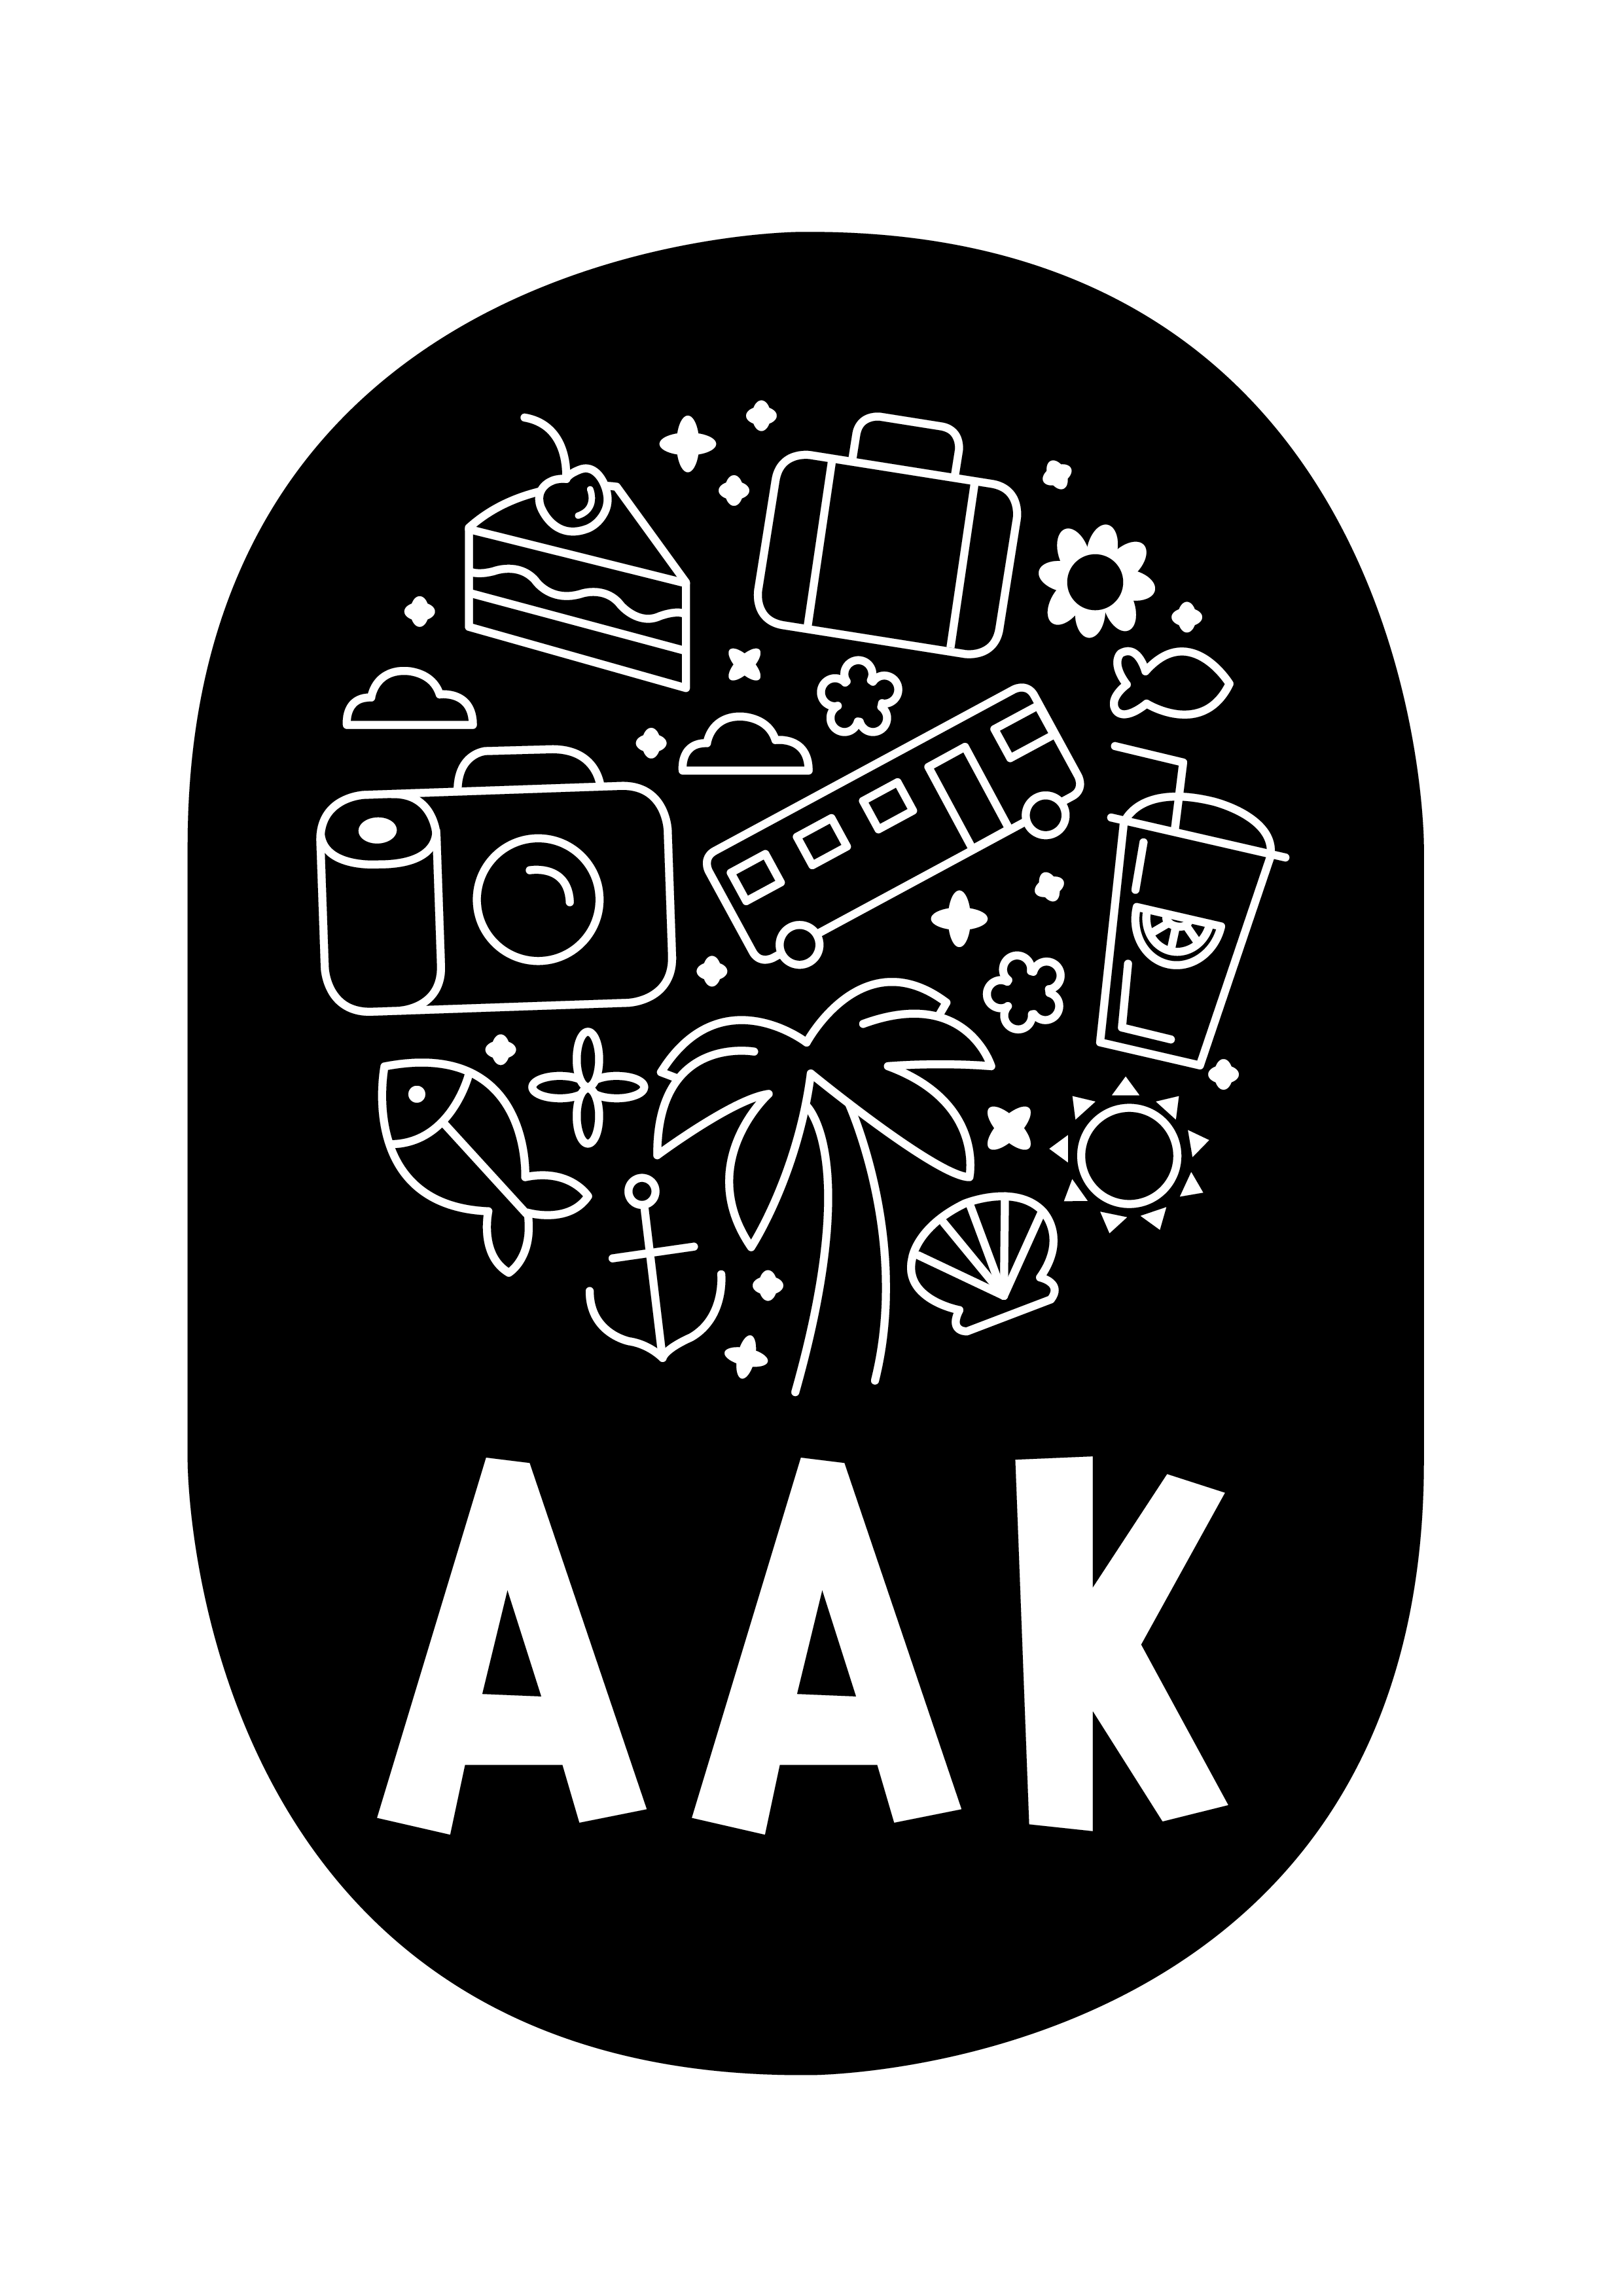 AAK logo2